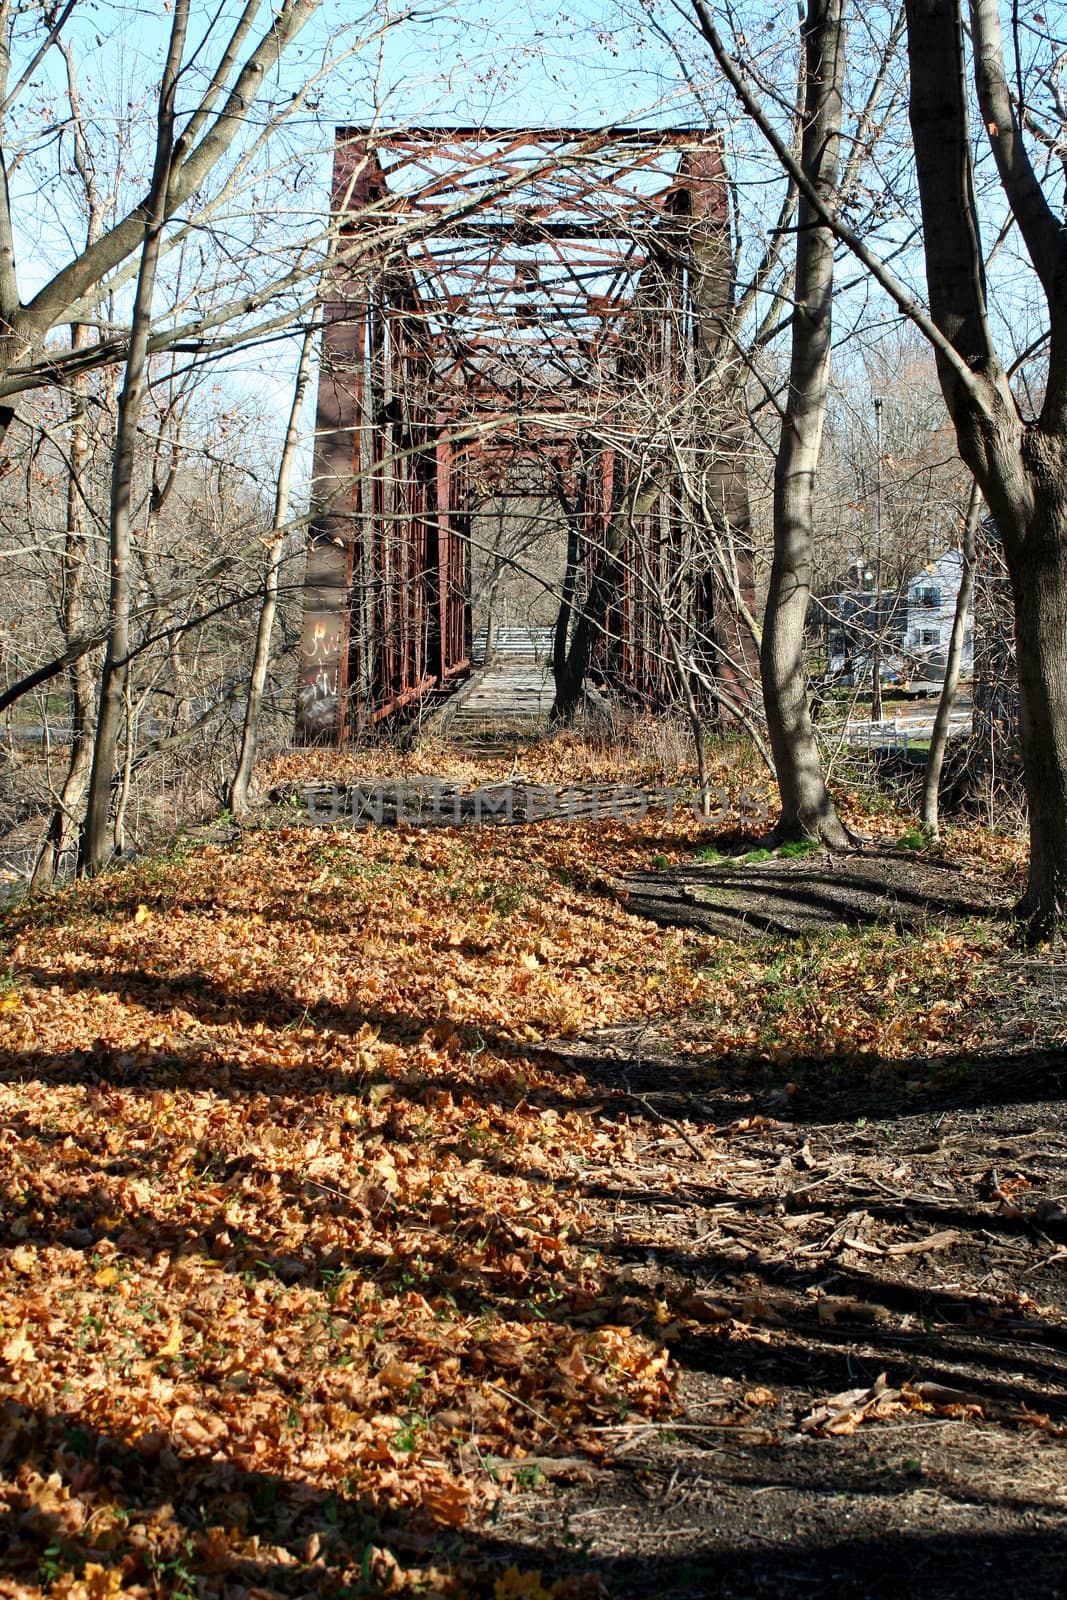 A Old railroad bridge